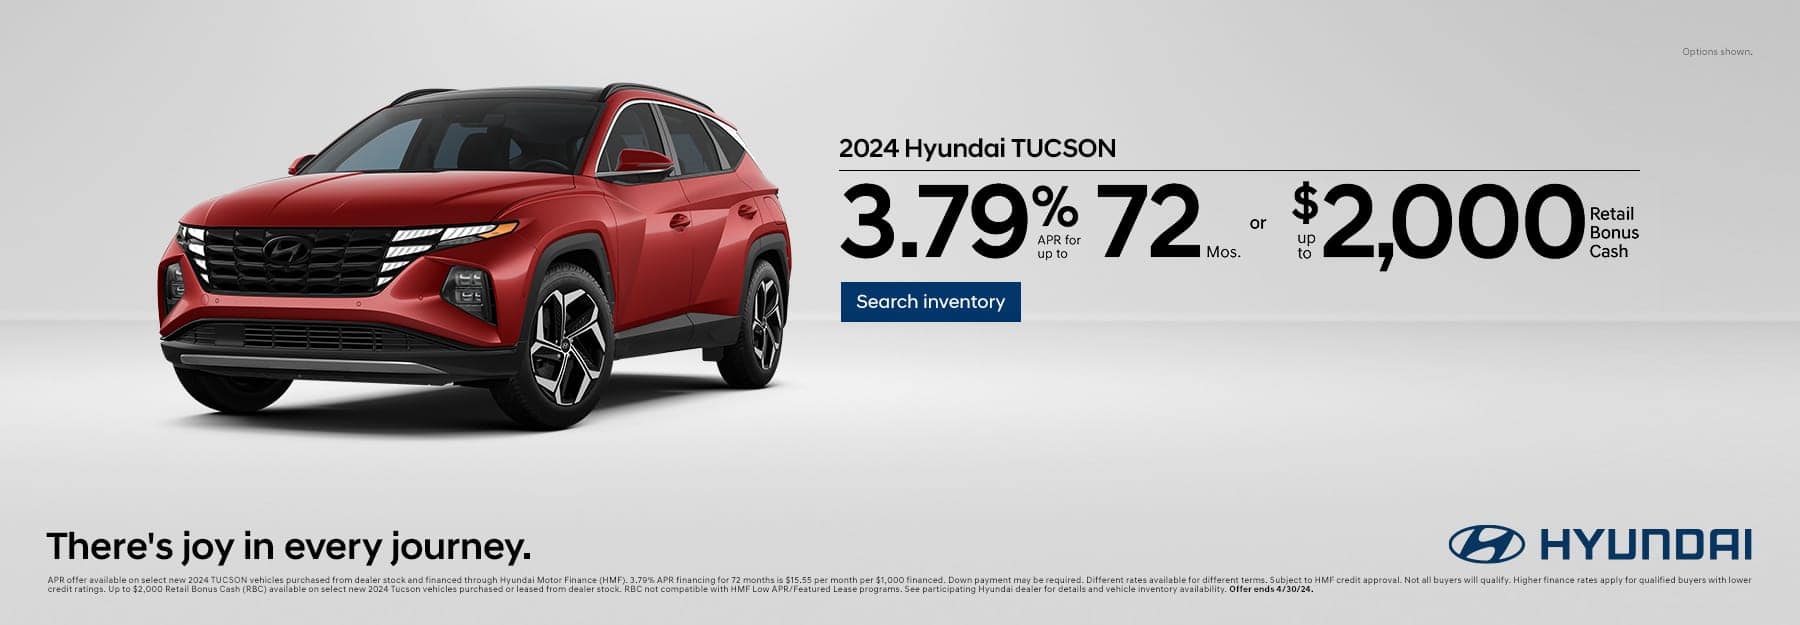 2024 Hyundai Tucson offer